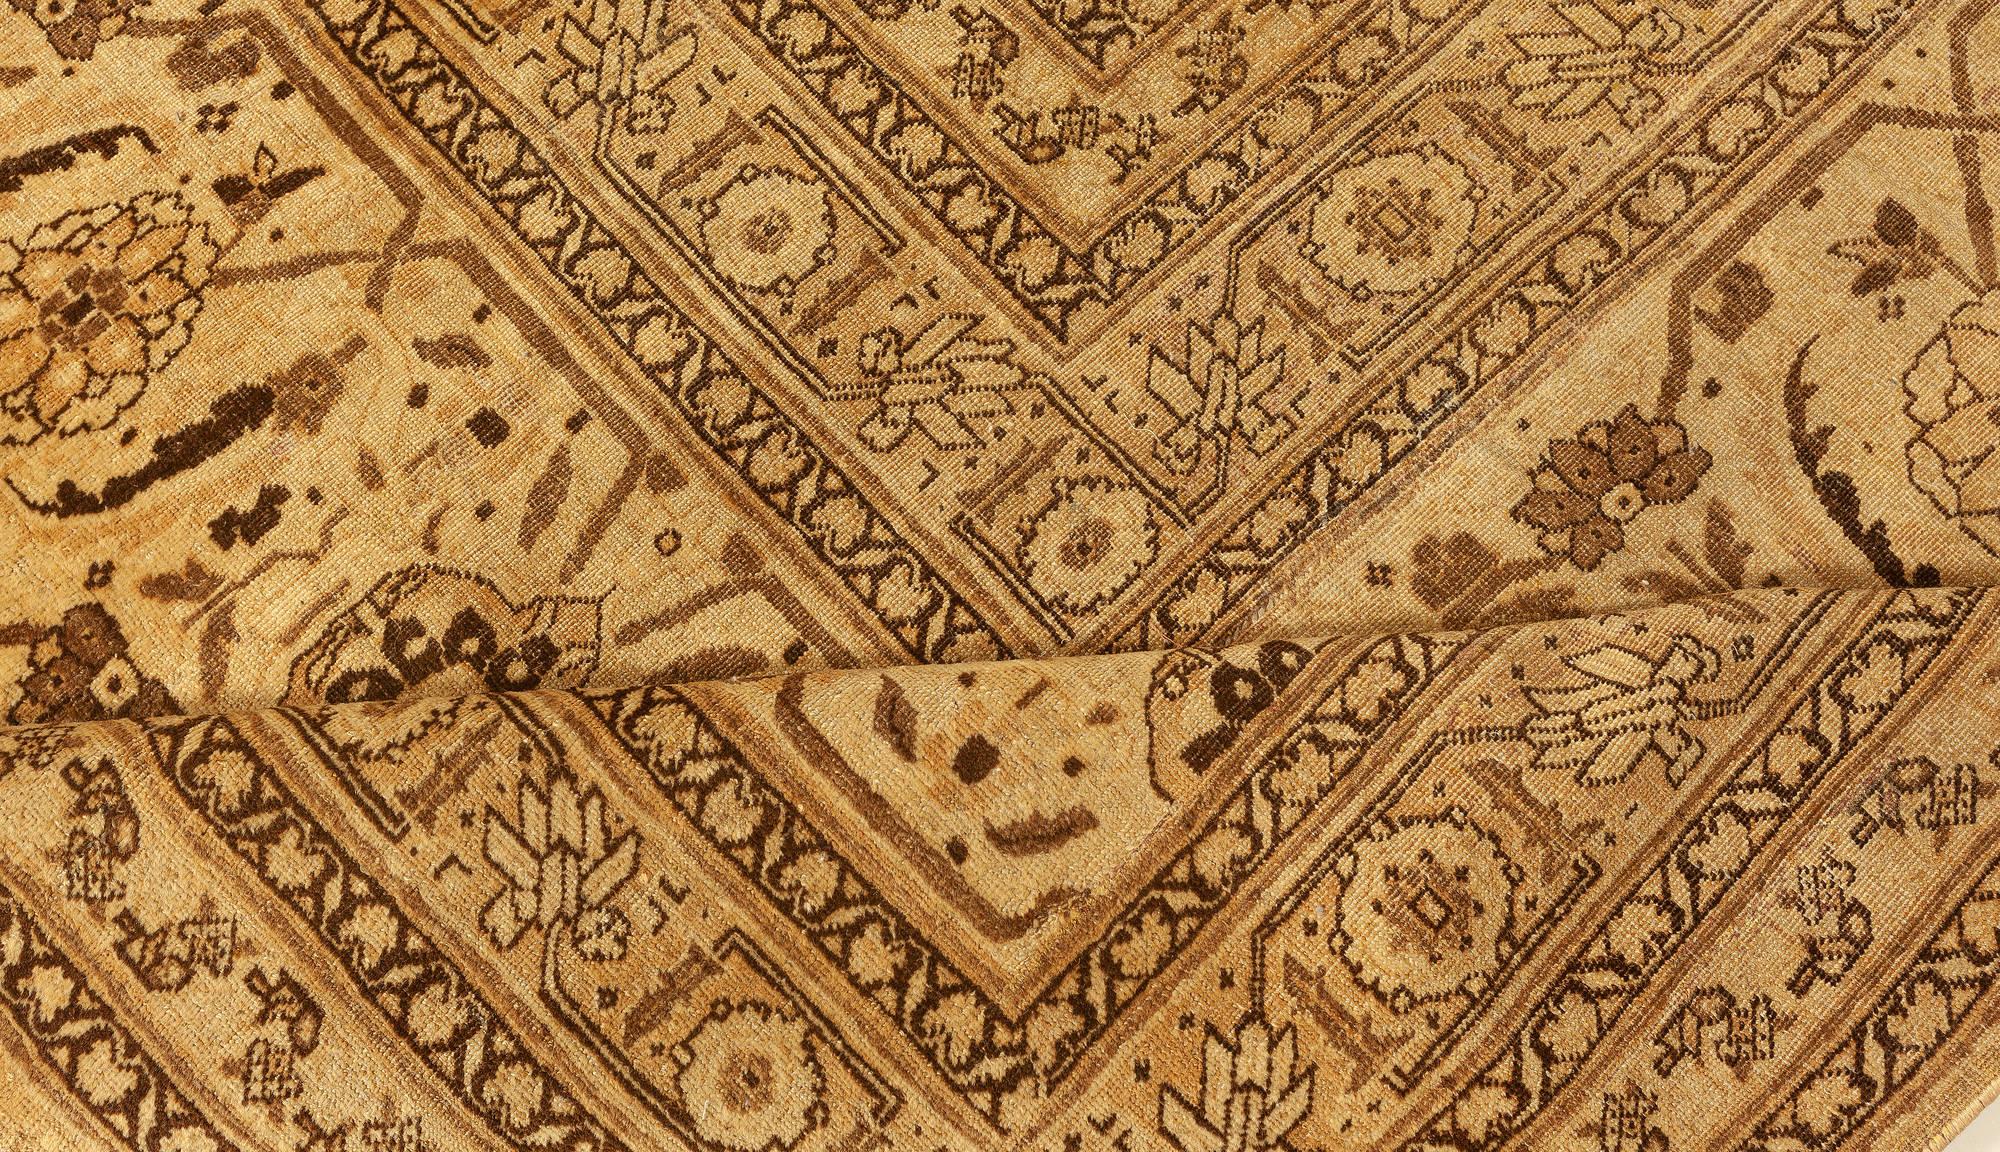 Oversized Antique Persian Tabriz Handmade Wool Carpet
Size: 15'10